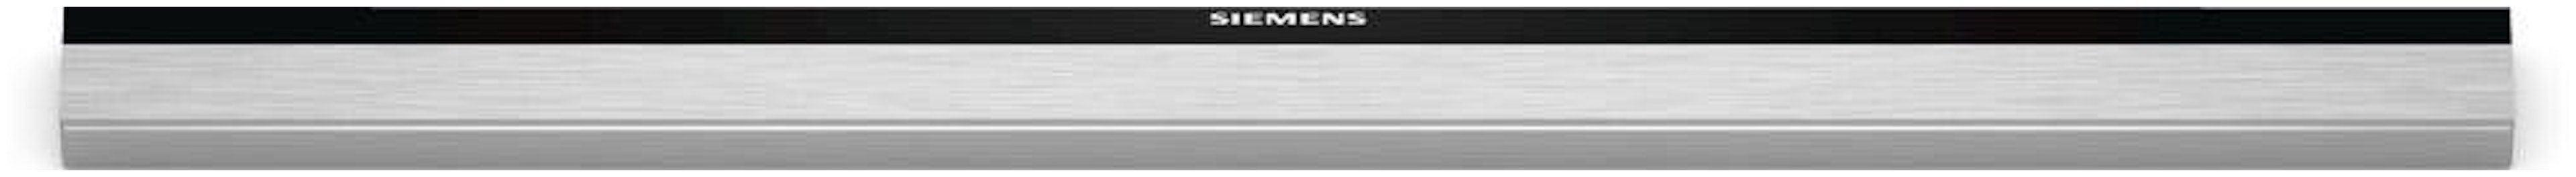 Siemens LZ46850